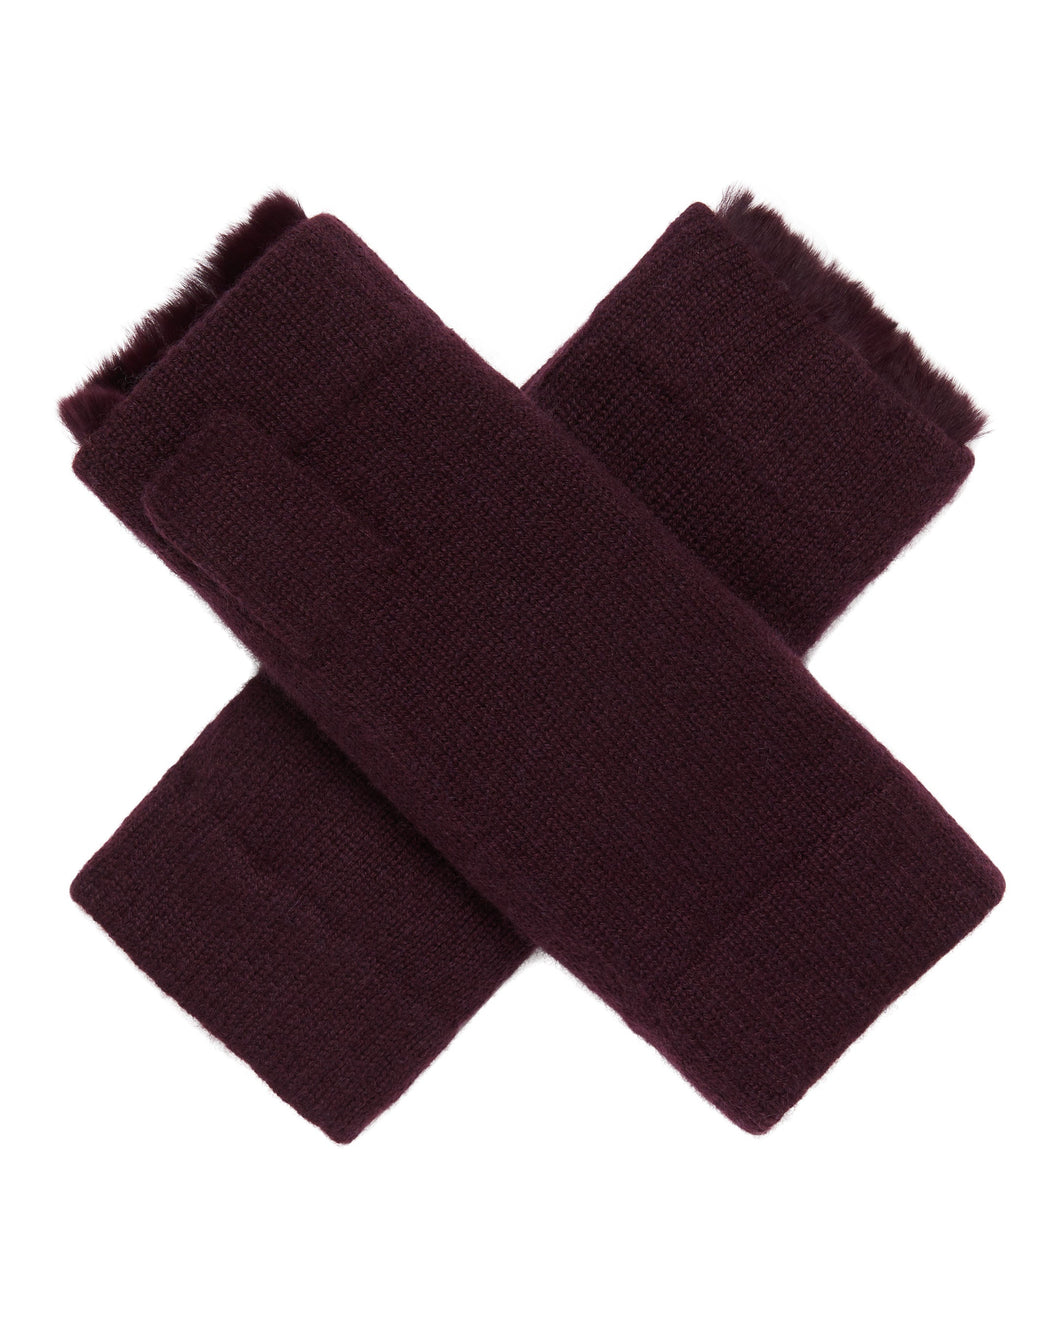 N.Peal Unisex Fur Lined Fingerless Cashmere Gloves Plum Purple